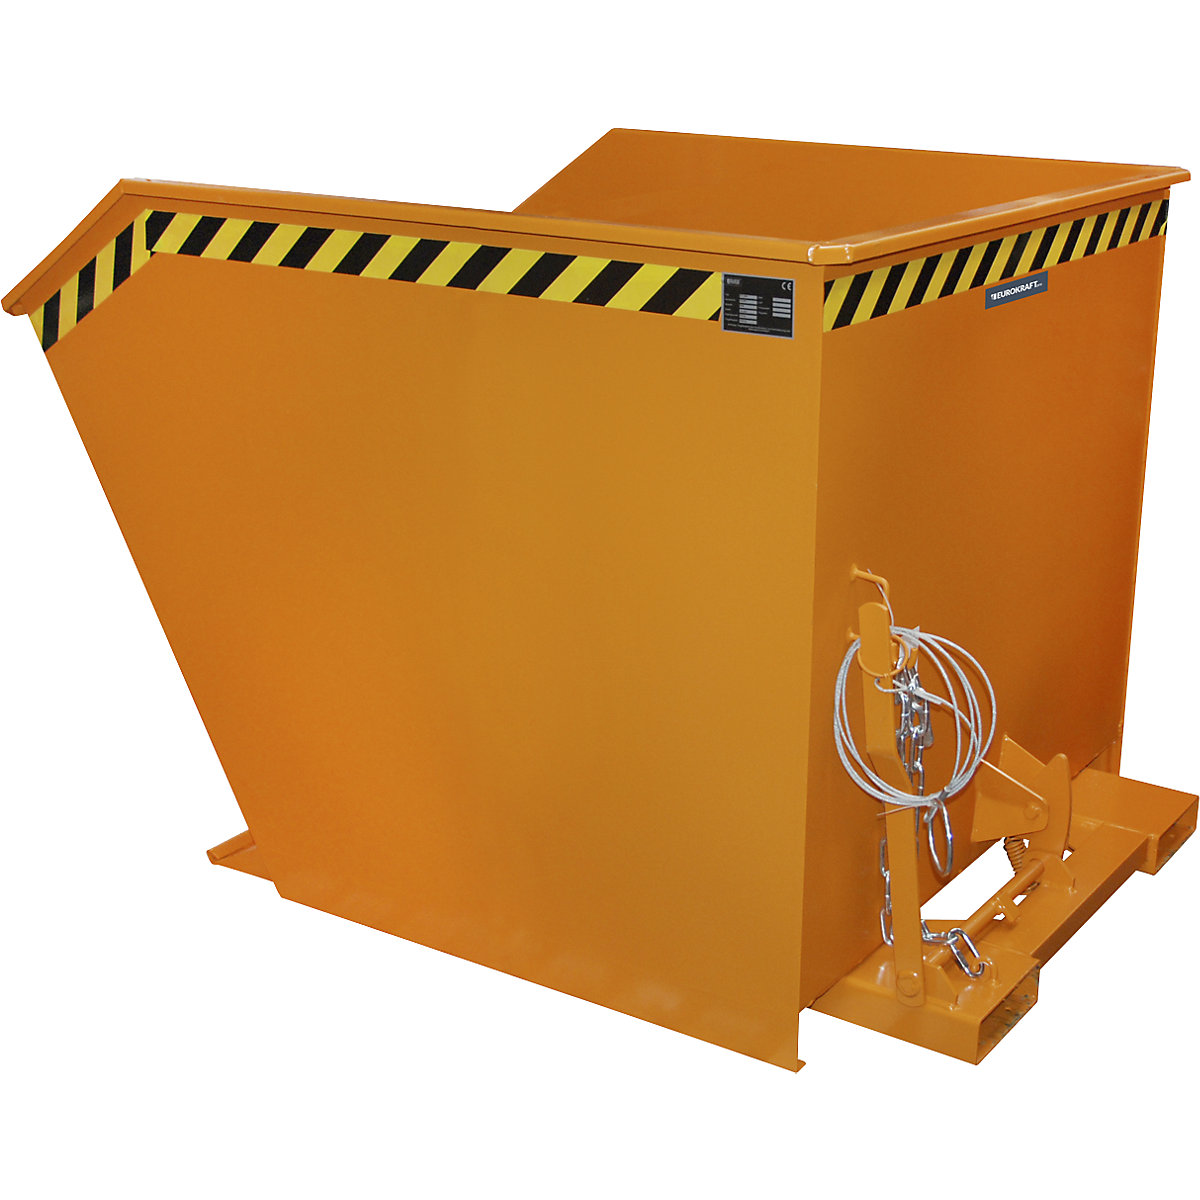 Volquete, construcción baja (E) – eurokraft pro, capacidad 1,5 m³, amarillo naranja-11